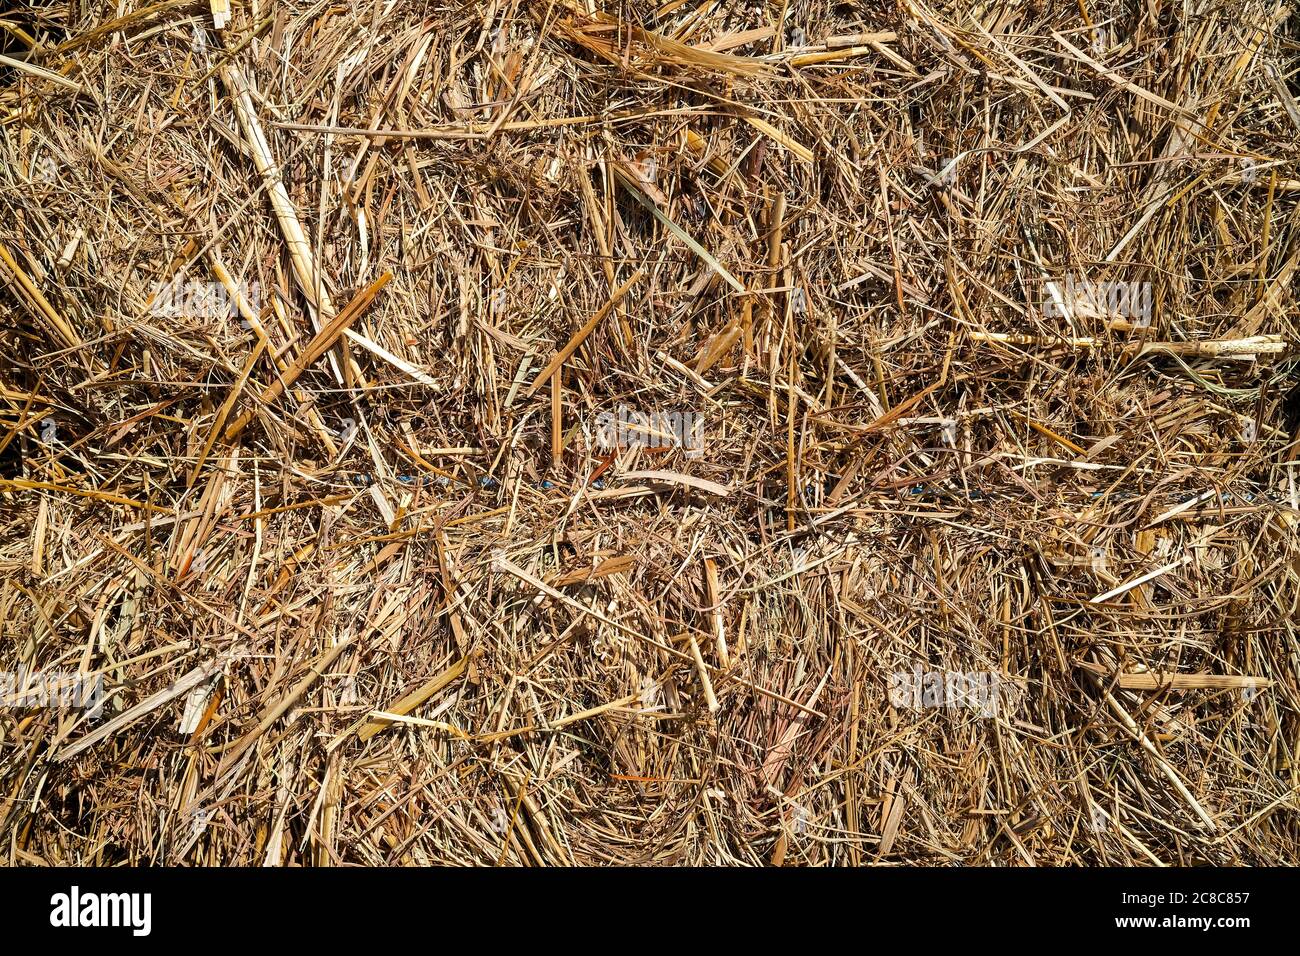 Closeup of a hay bale Stock Photo